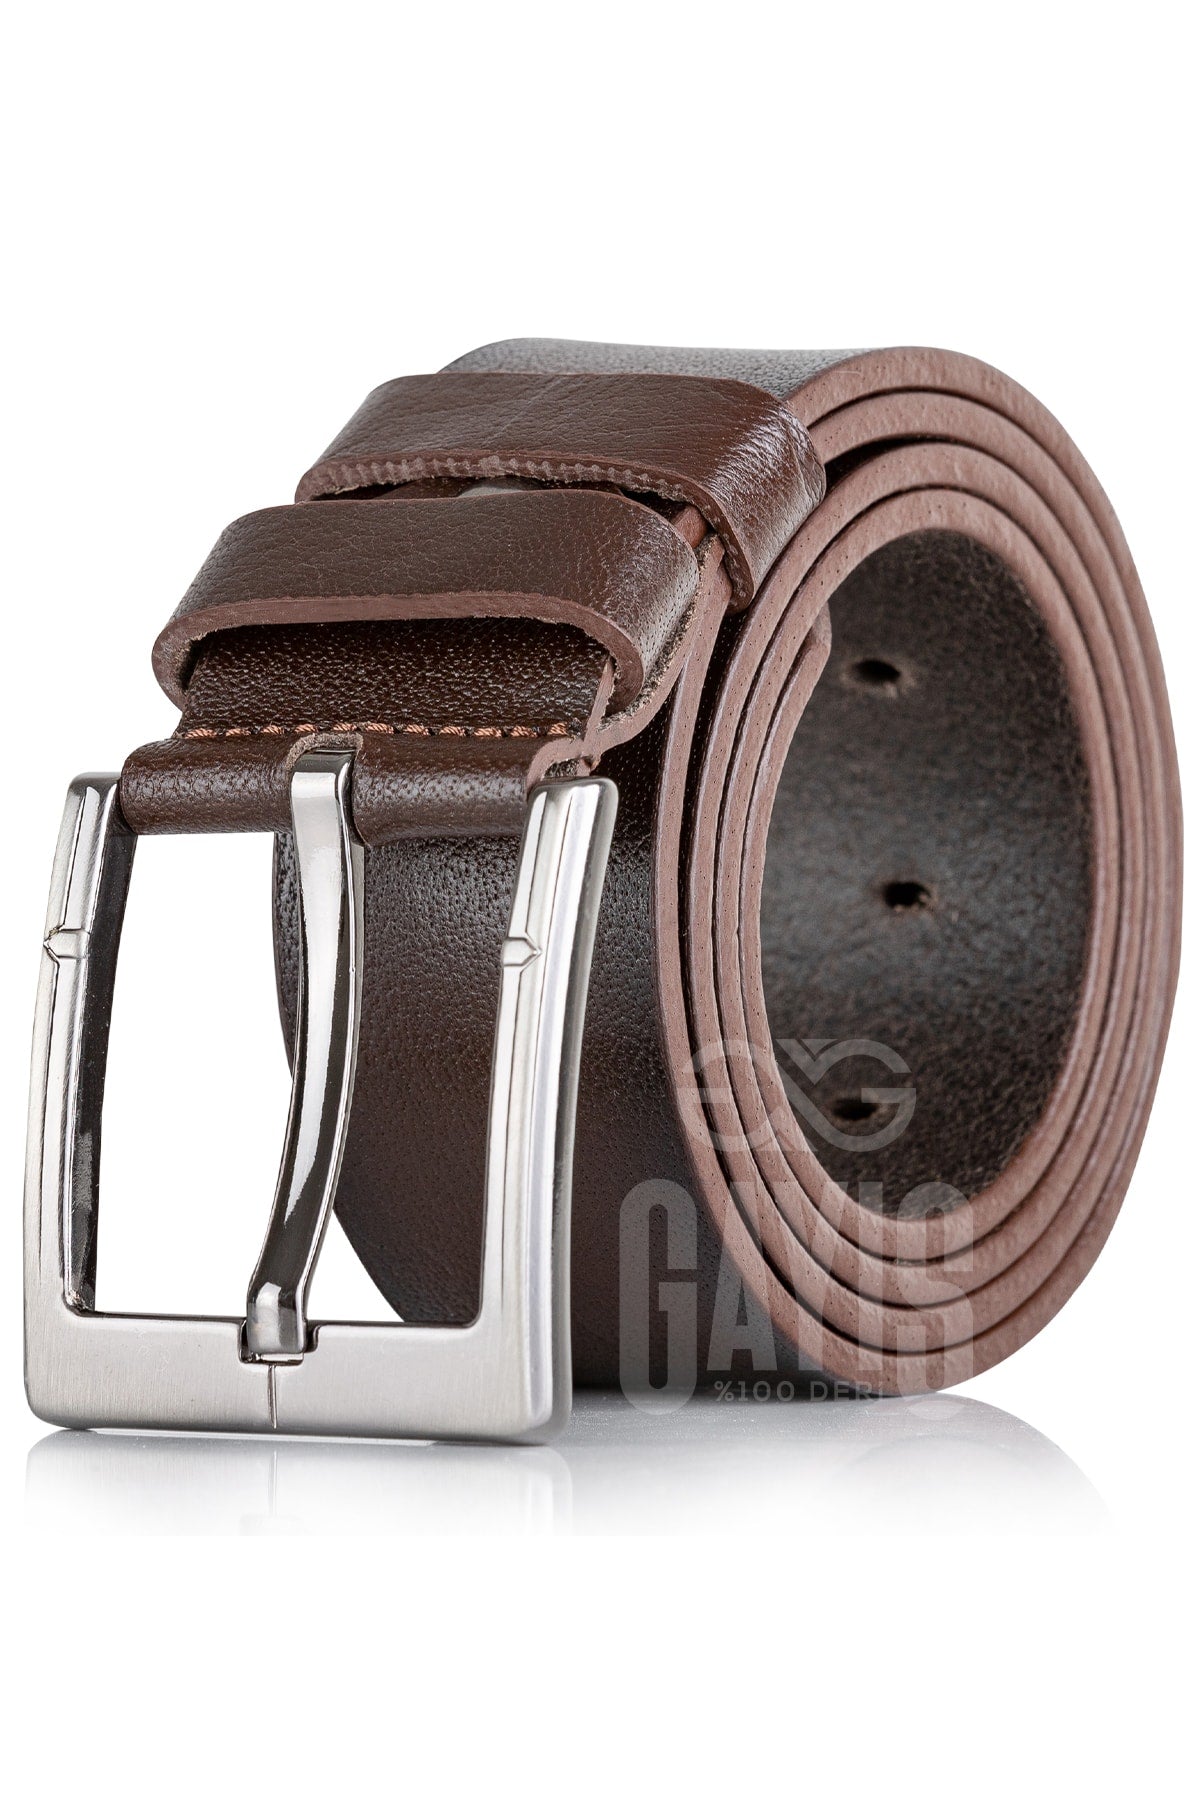 100% Genuine Buffalo Leather Brown Men's Jeans Belt - Men's Gift Belt